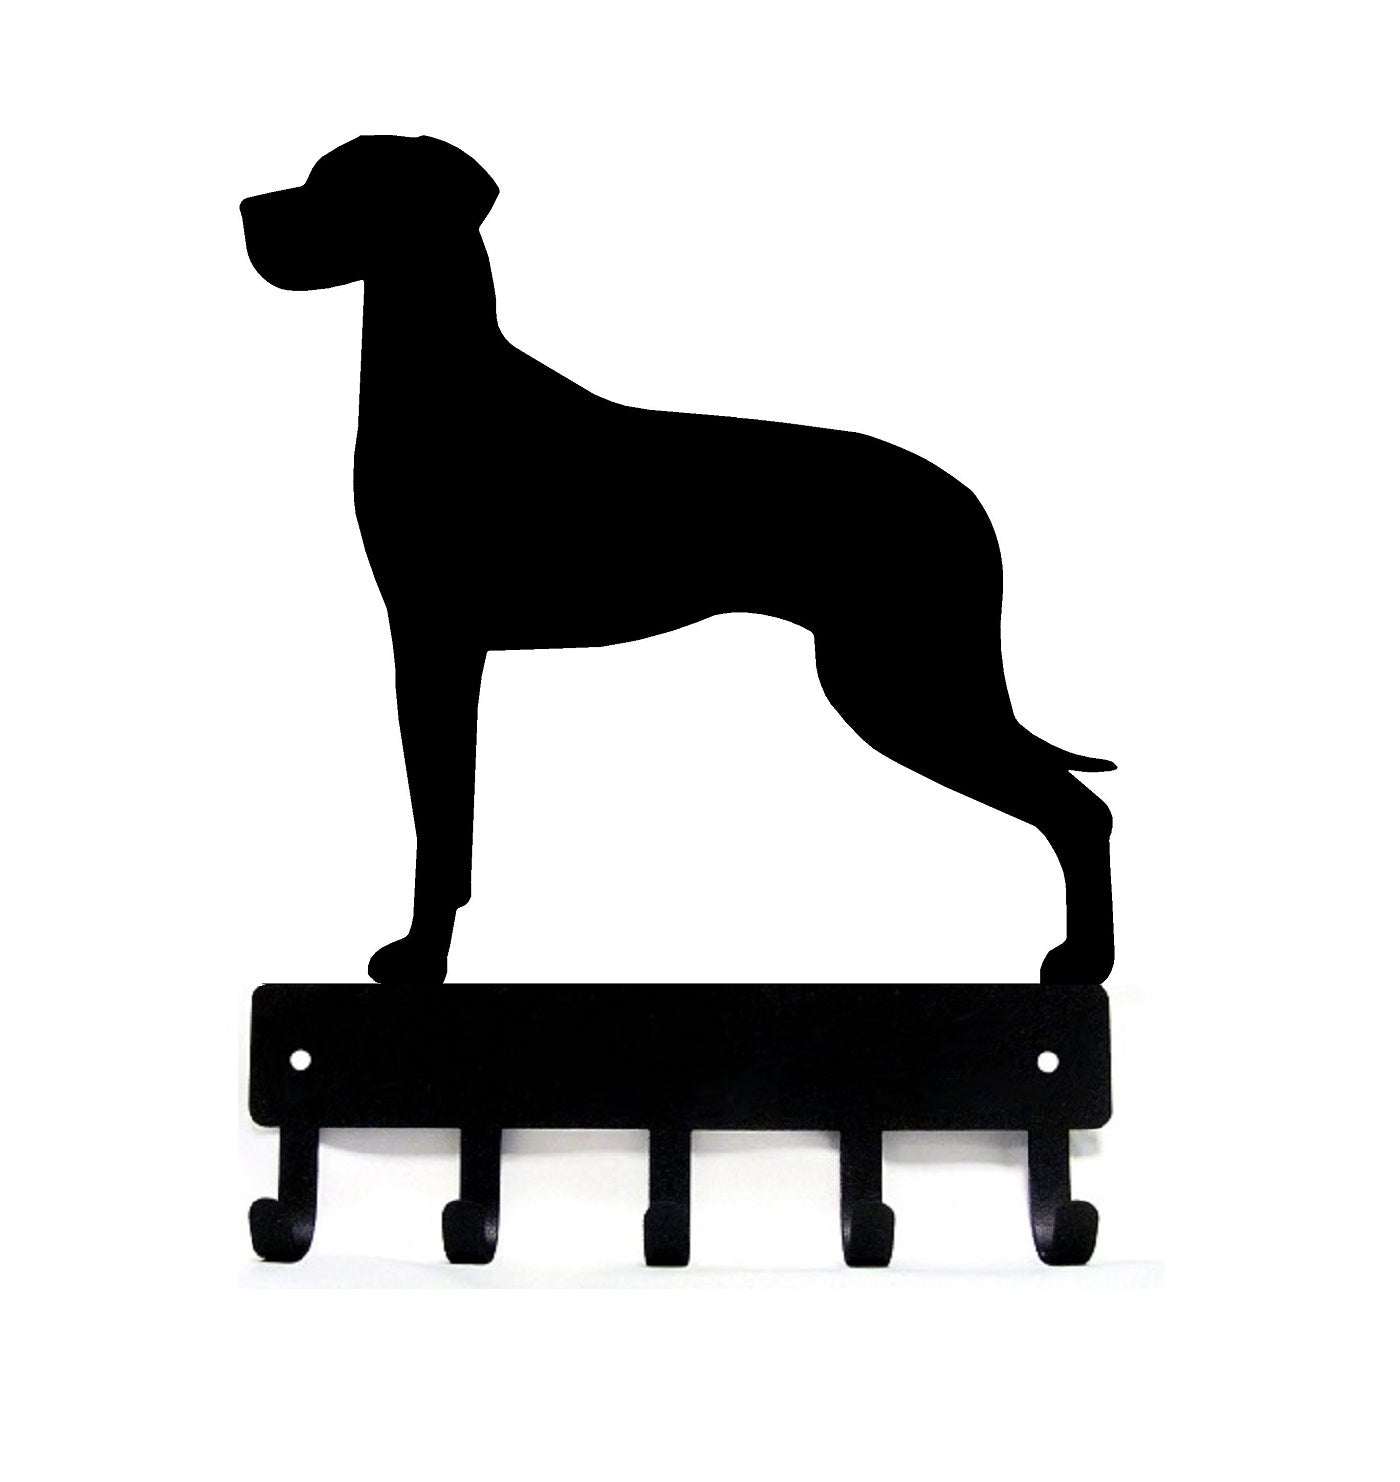 Great Dane Dog Key Rack/ Leash Hanger - The Metal Peddler Key Rack breed, Breed G, Dog, Great Dane, Inv-T, key rack, leash Hanger, SALE